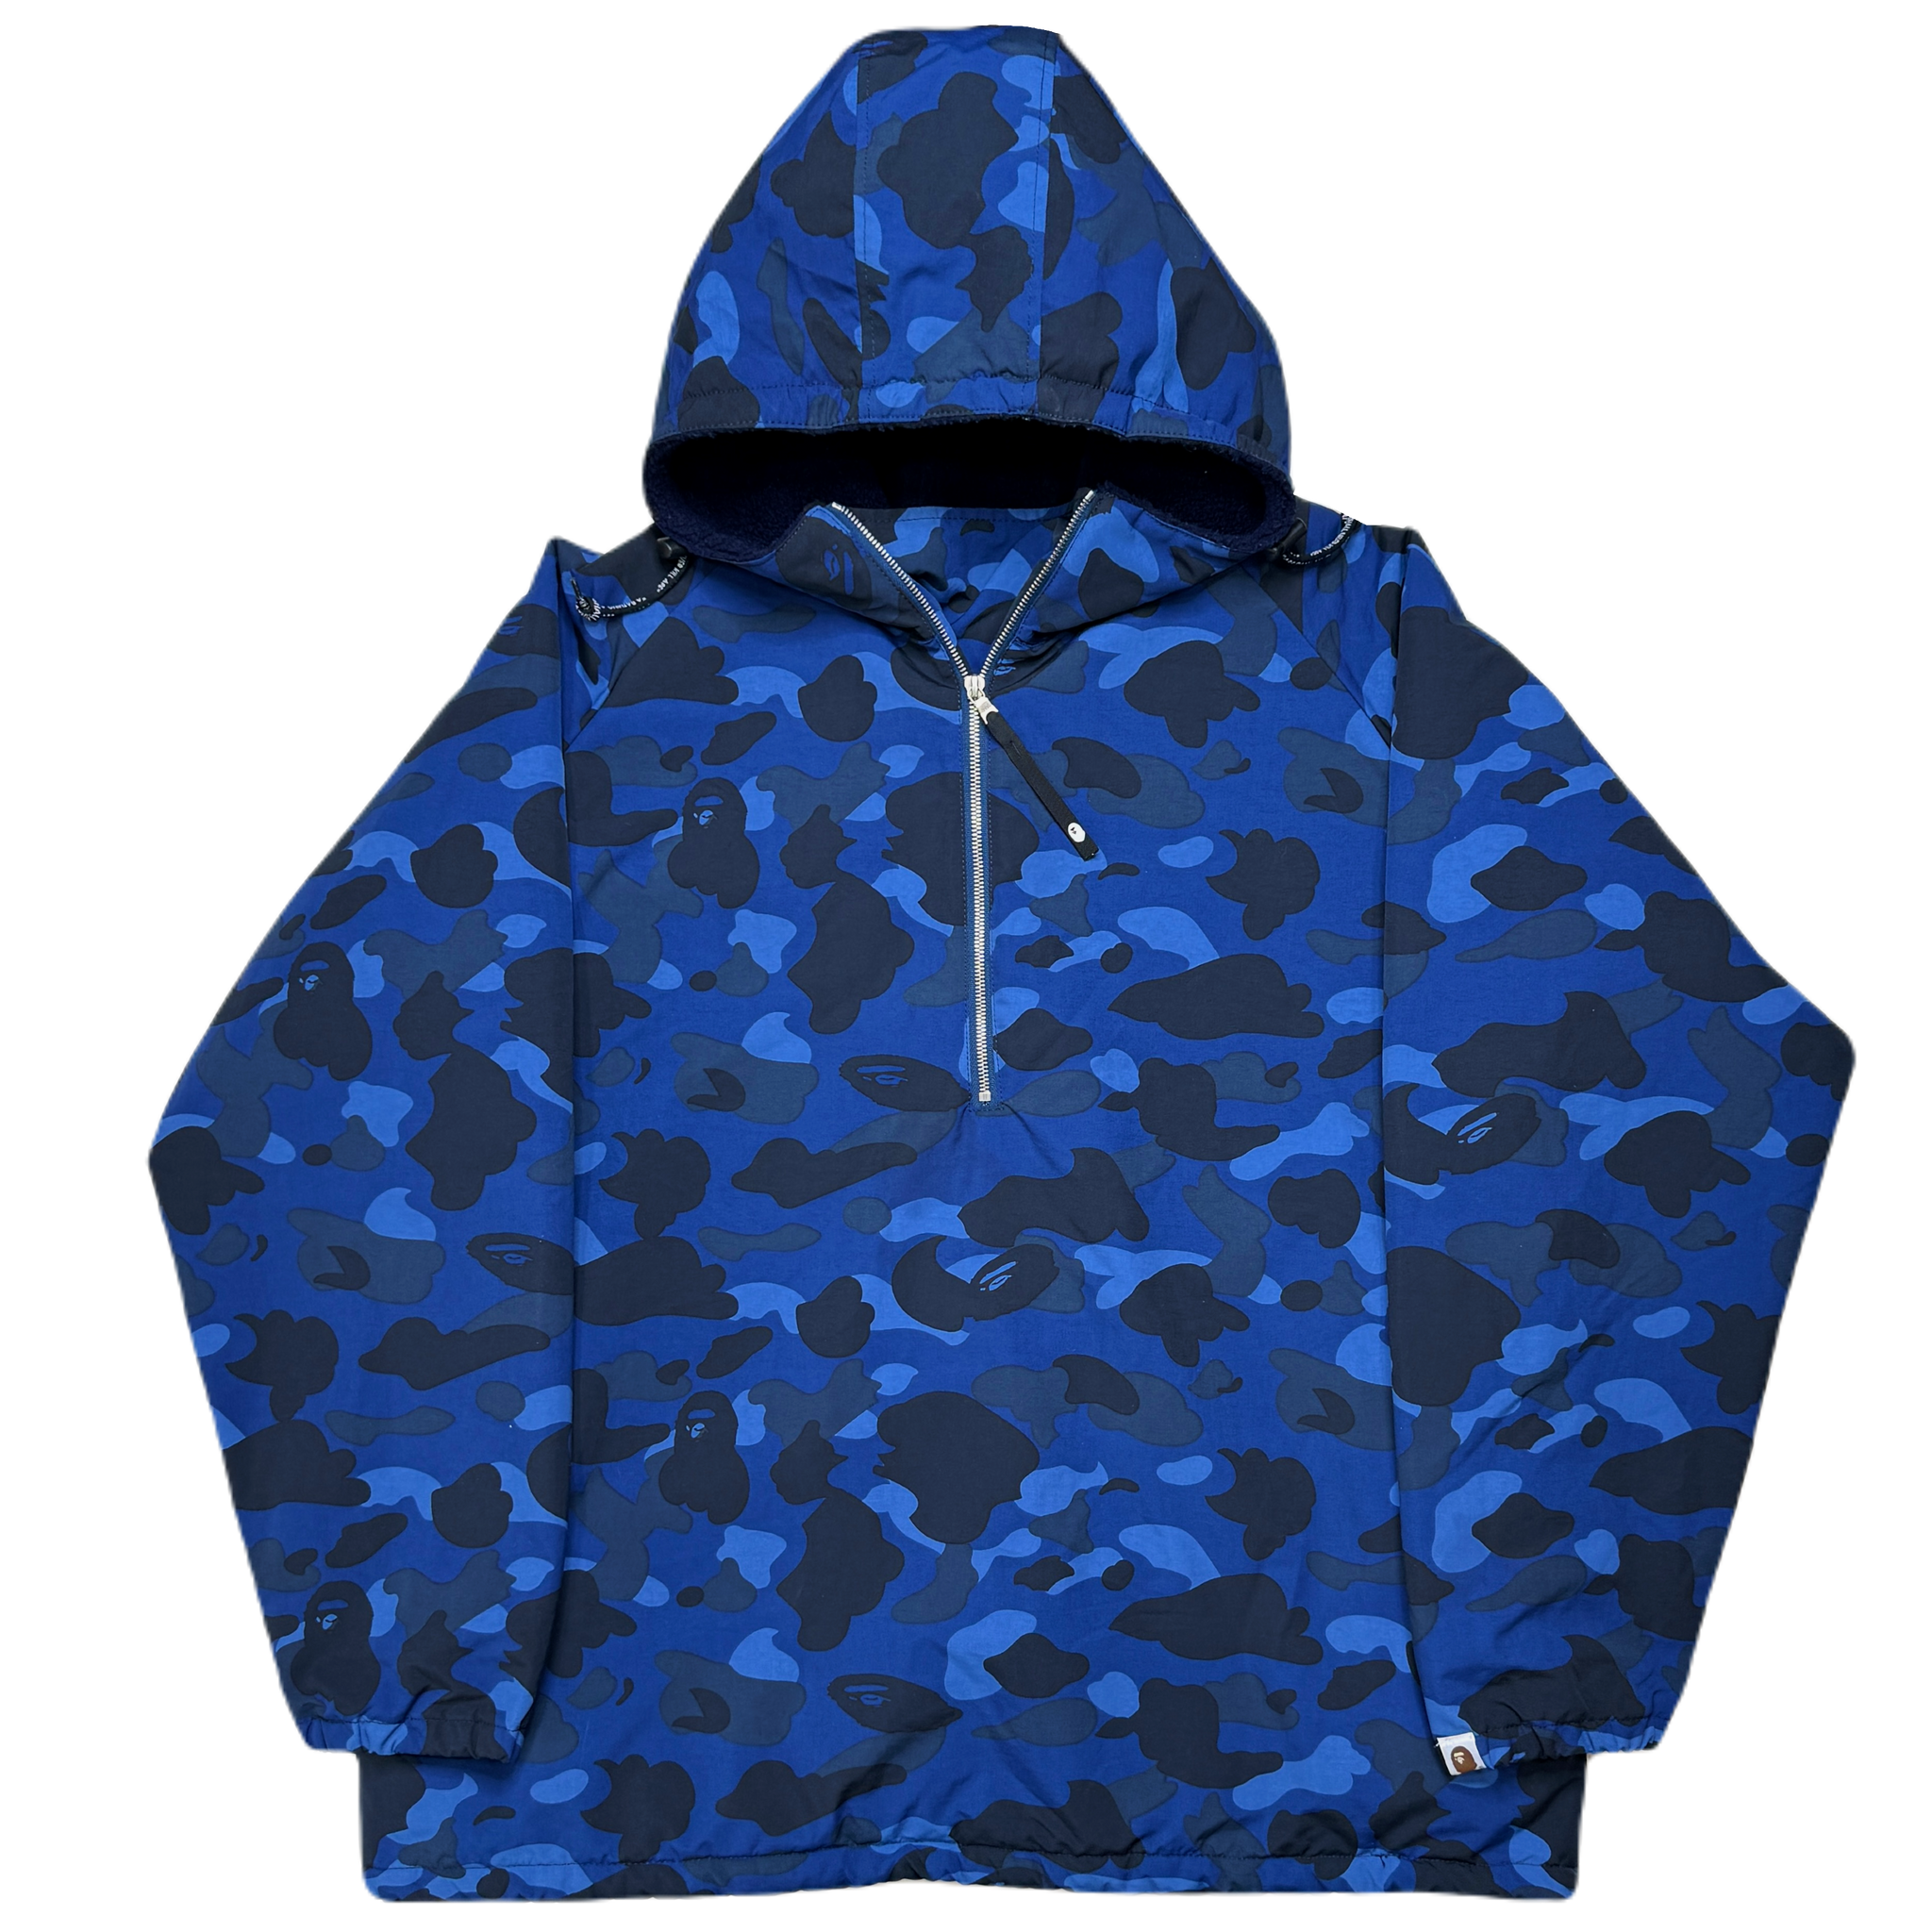 [XL] OG Bape Blue Camo Fleece-Lined Jacket